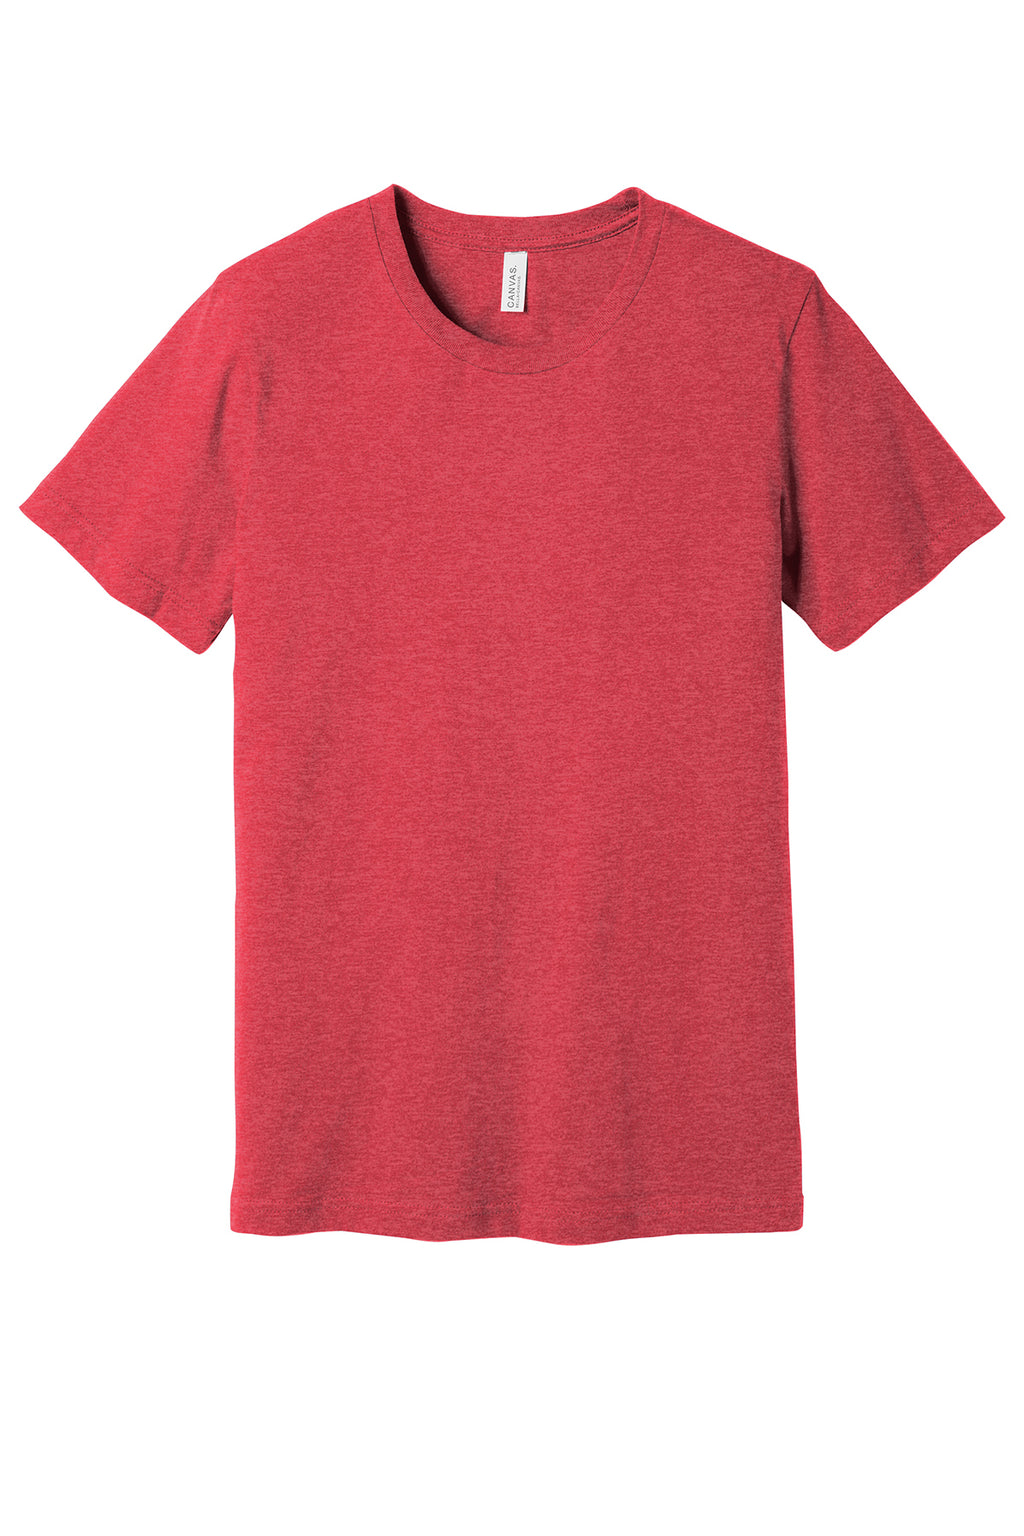 Bella Canvas Mens/Unisex Cotton Short Sleeve Shirts Heather Red